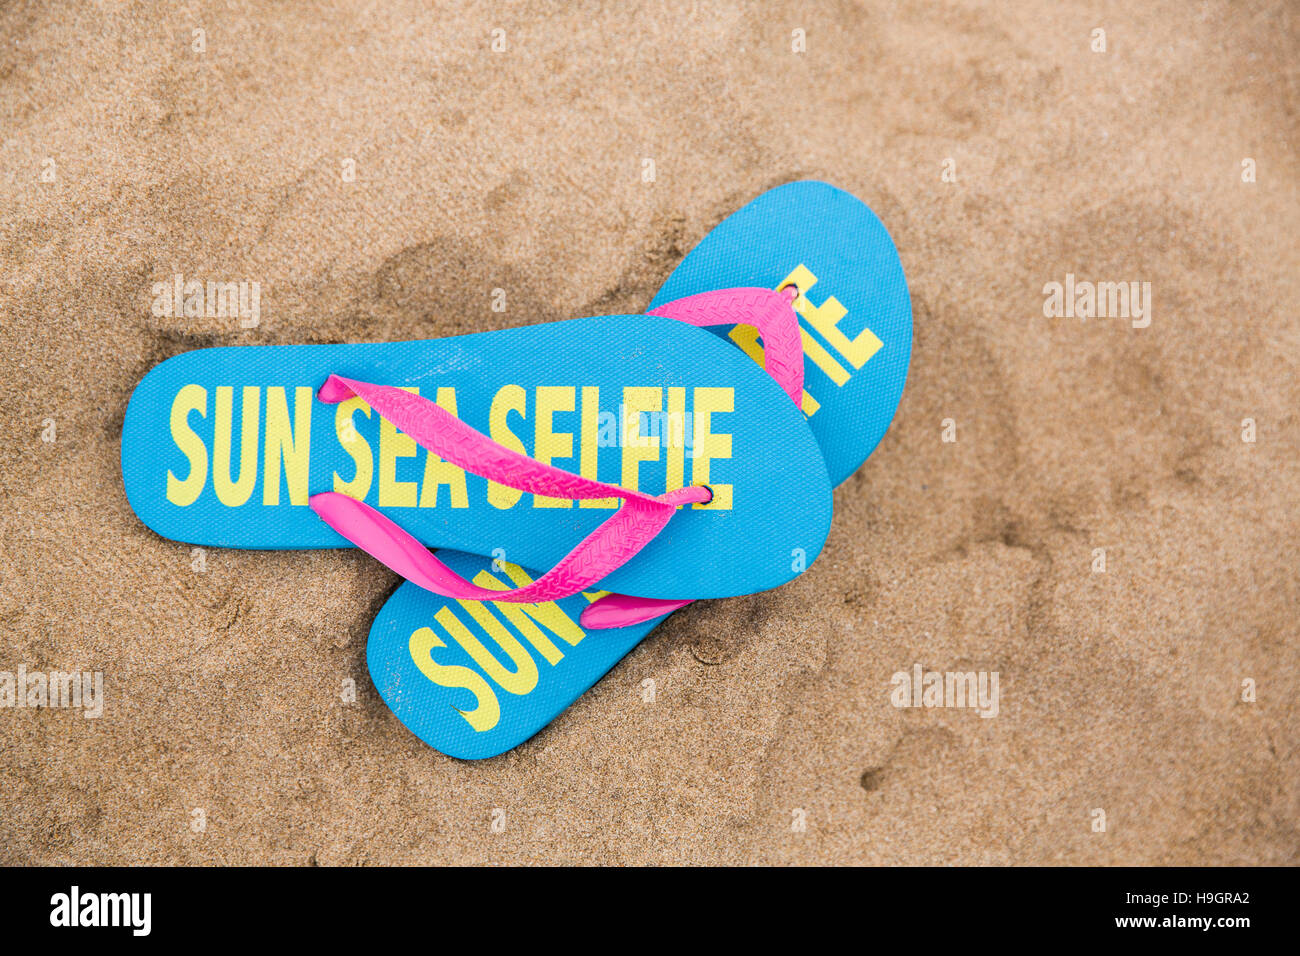 Pair of flip flops with 'Sun Sea Selfie' written on them on a sandy beach. Stock Photo